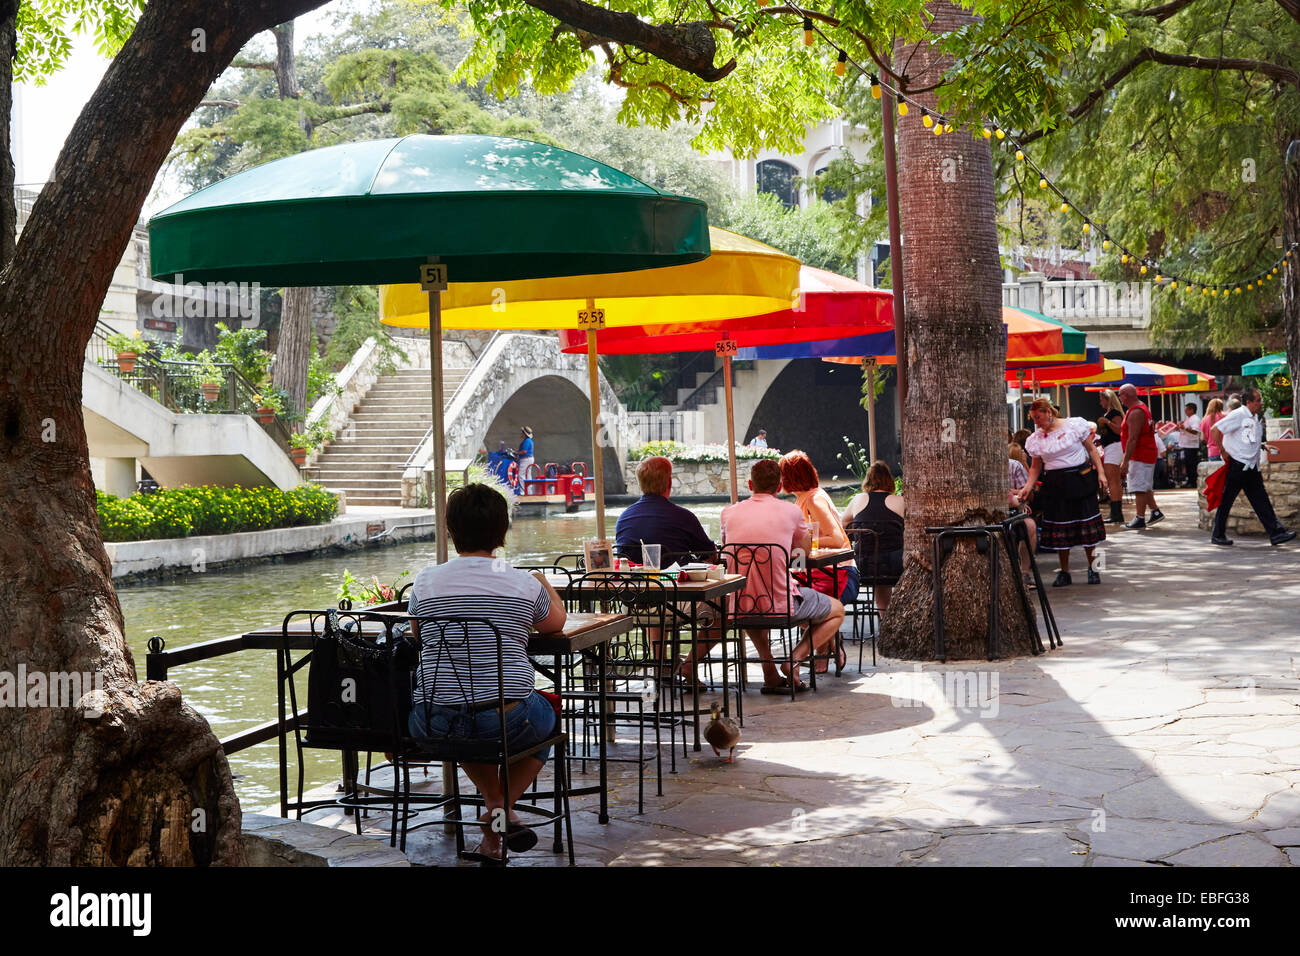 Sidewalk cafe with colorful umbrellas at the Riverwalk, San Antonio, Texas, USA Stock Photo